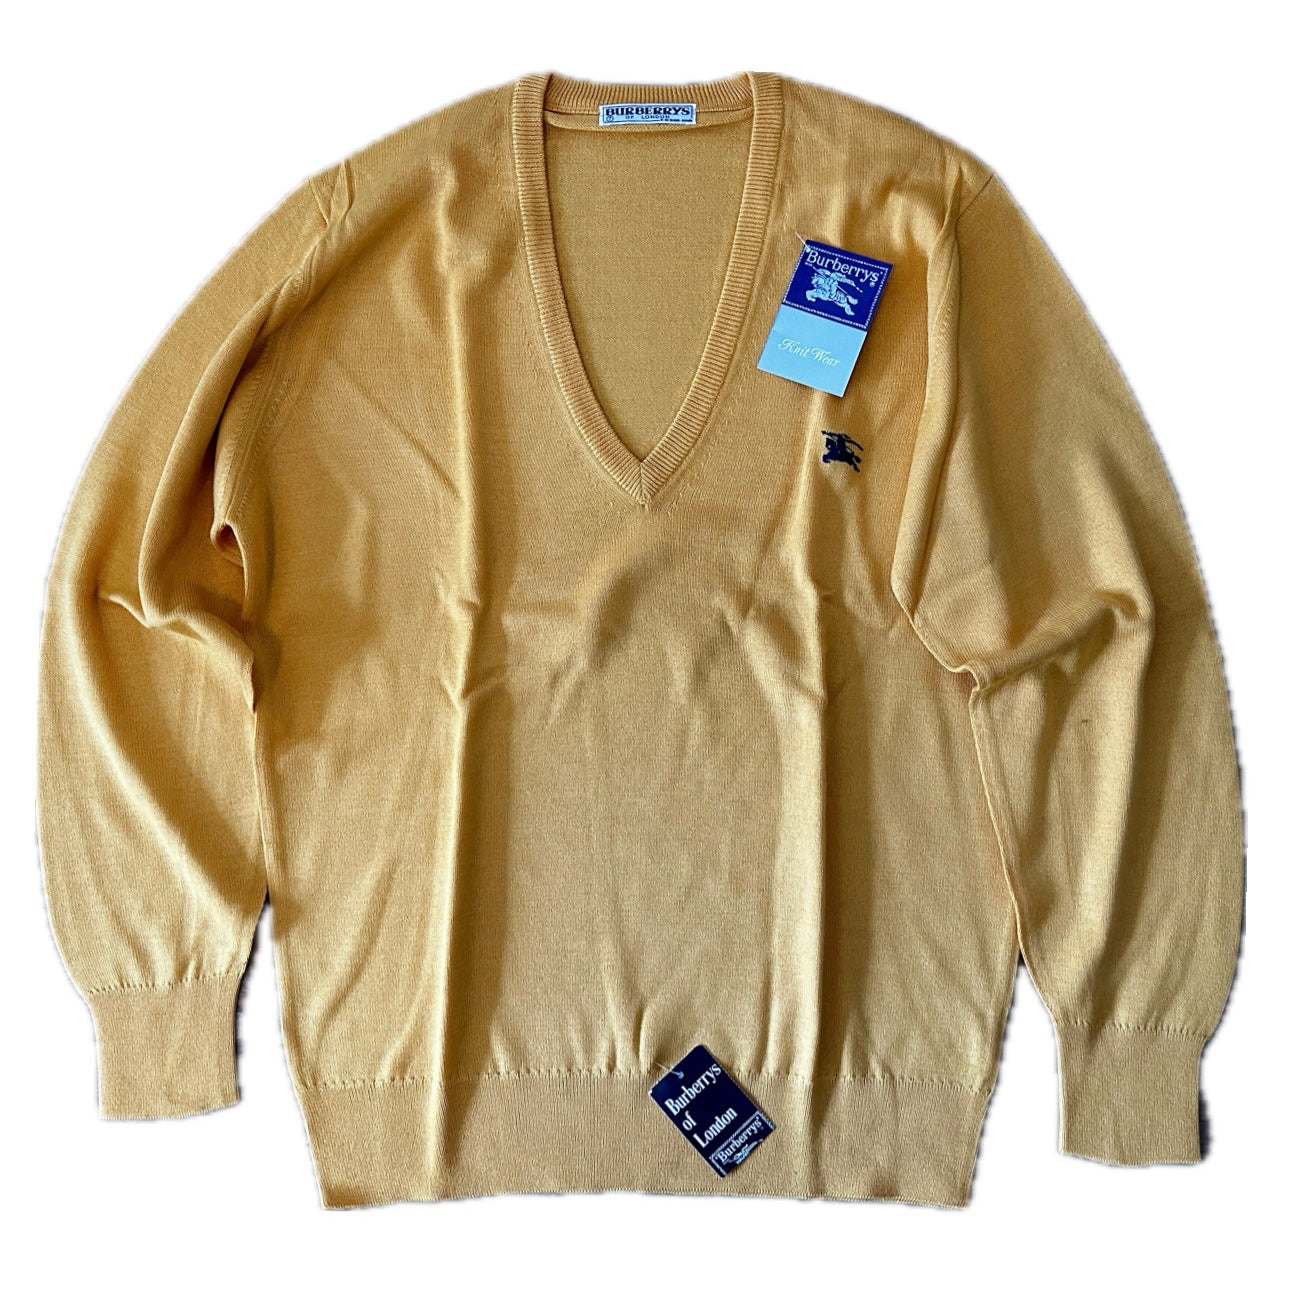 Burberrys Vintage 80s V-Neck Sweater - Deadstock - 7 / XL - Made in Spain